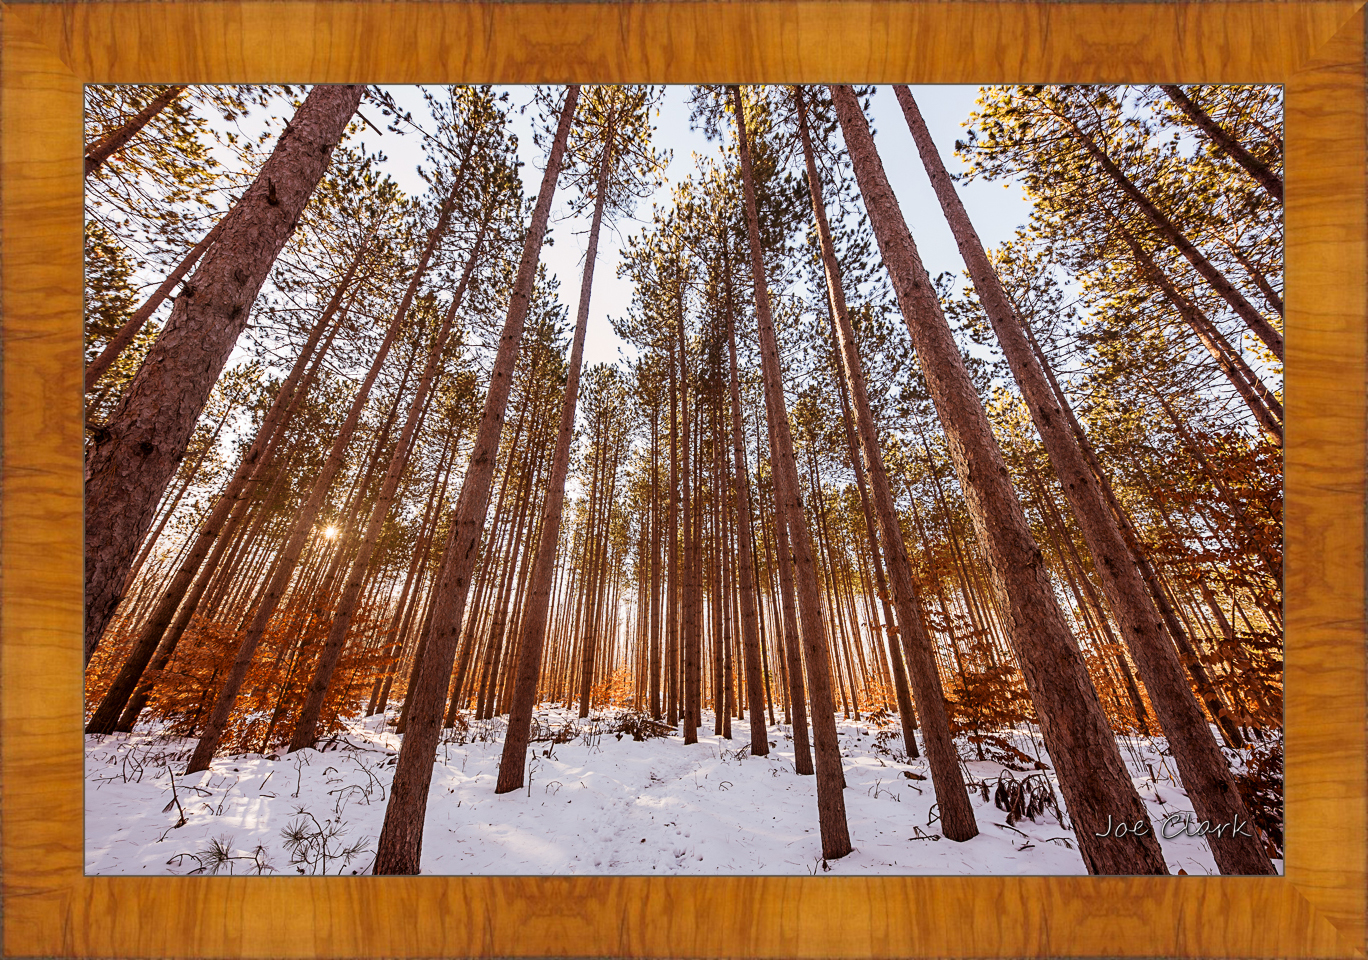 Pine Snow by Joe Clark R60583